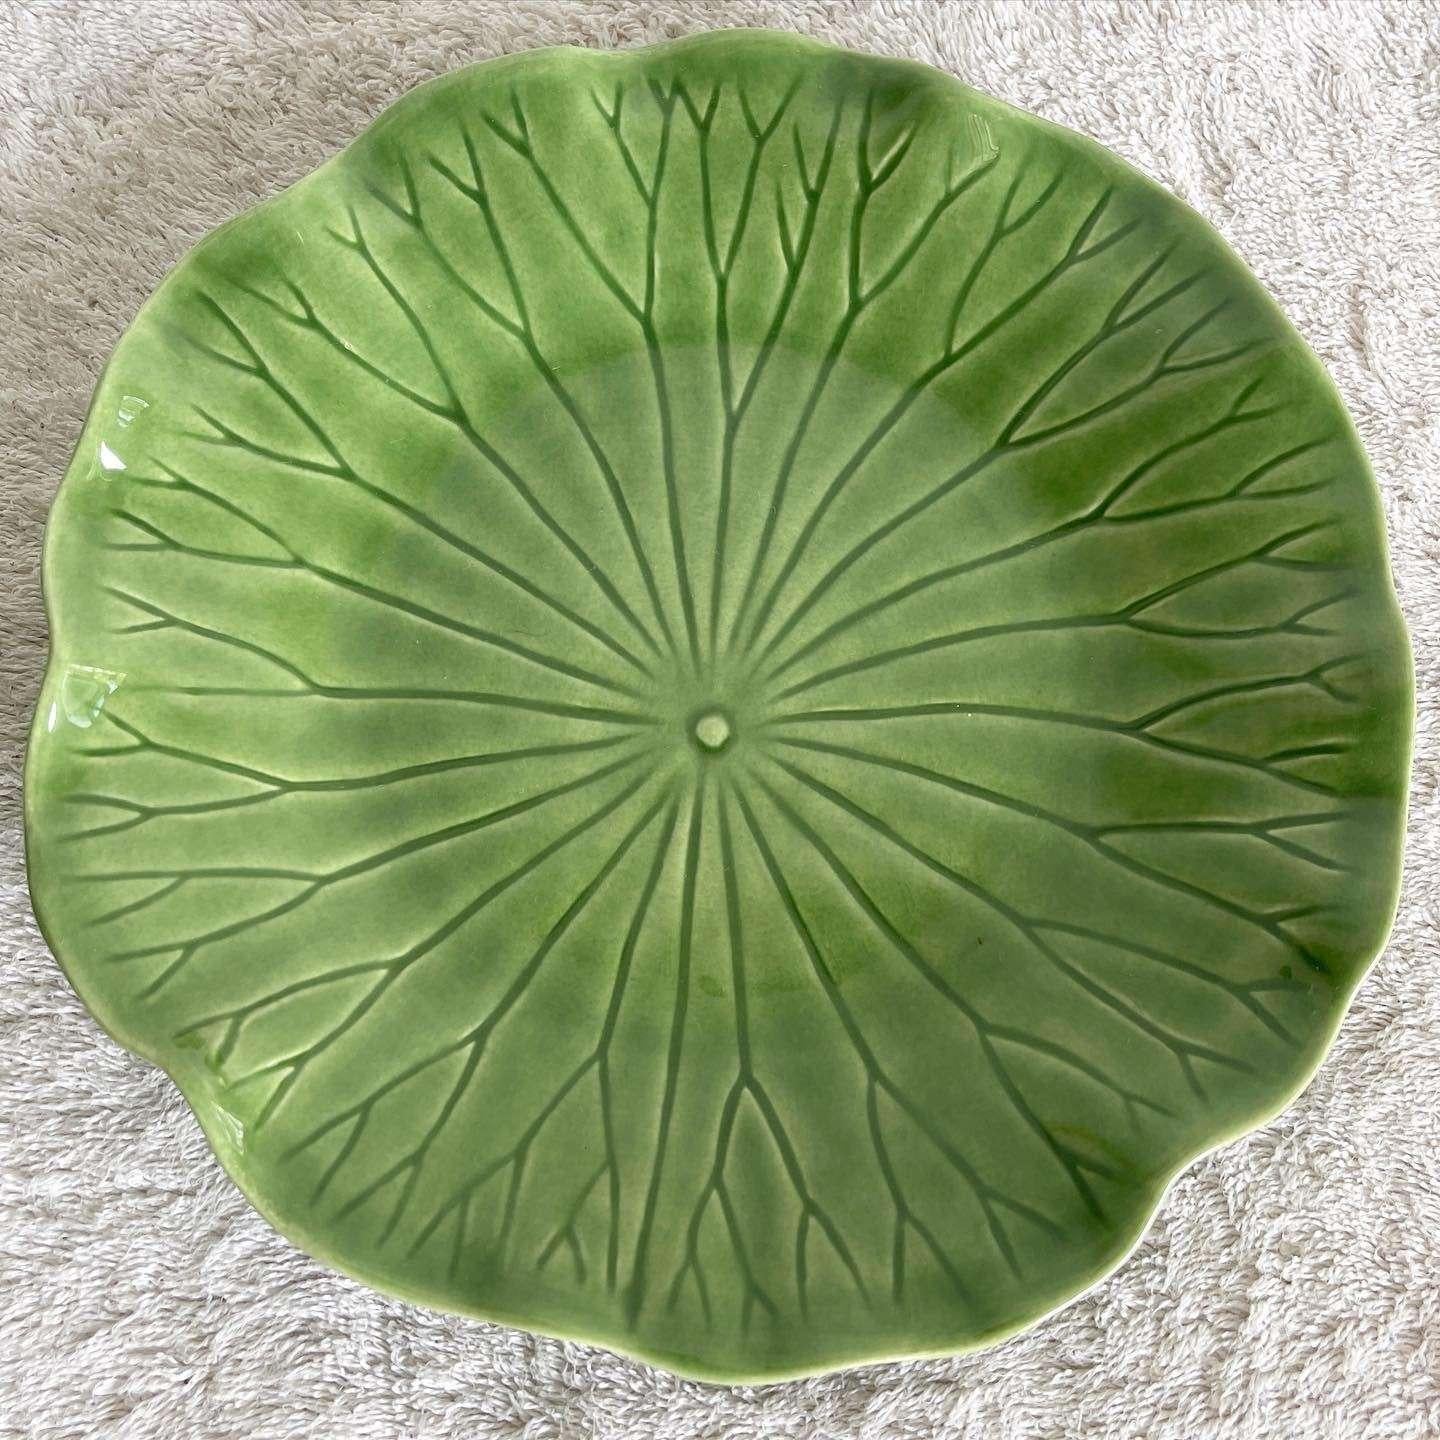 metlox lotus dinnerware